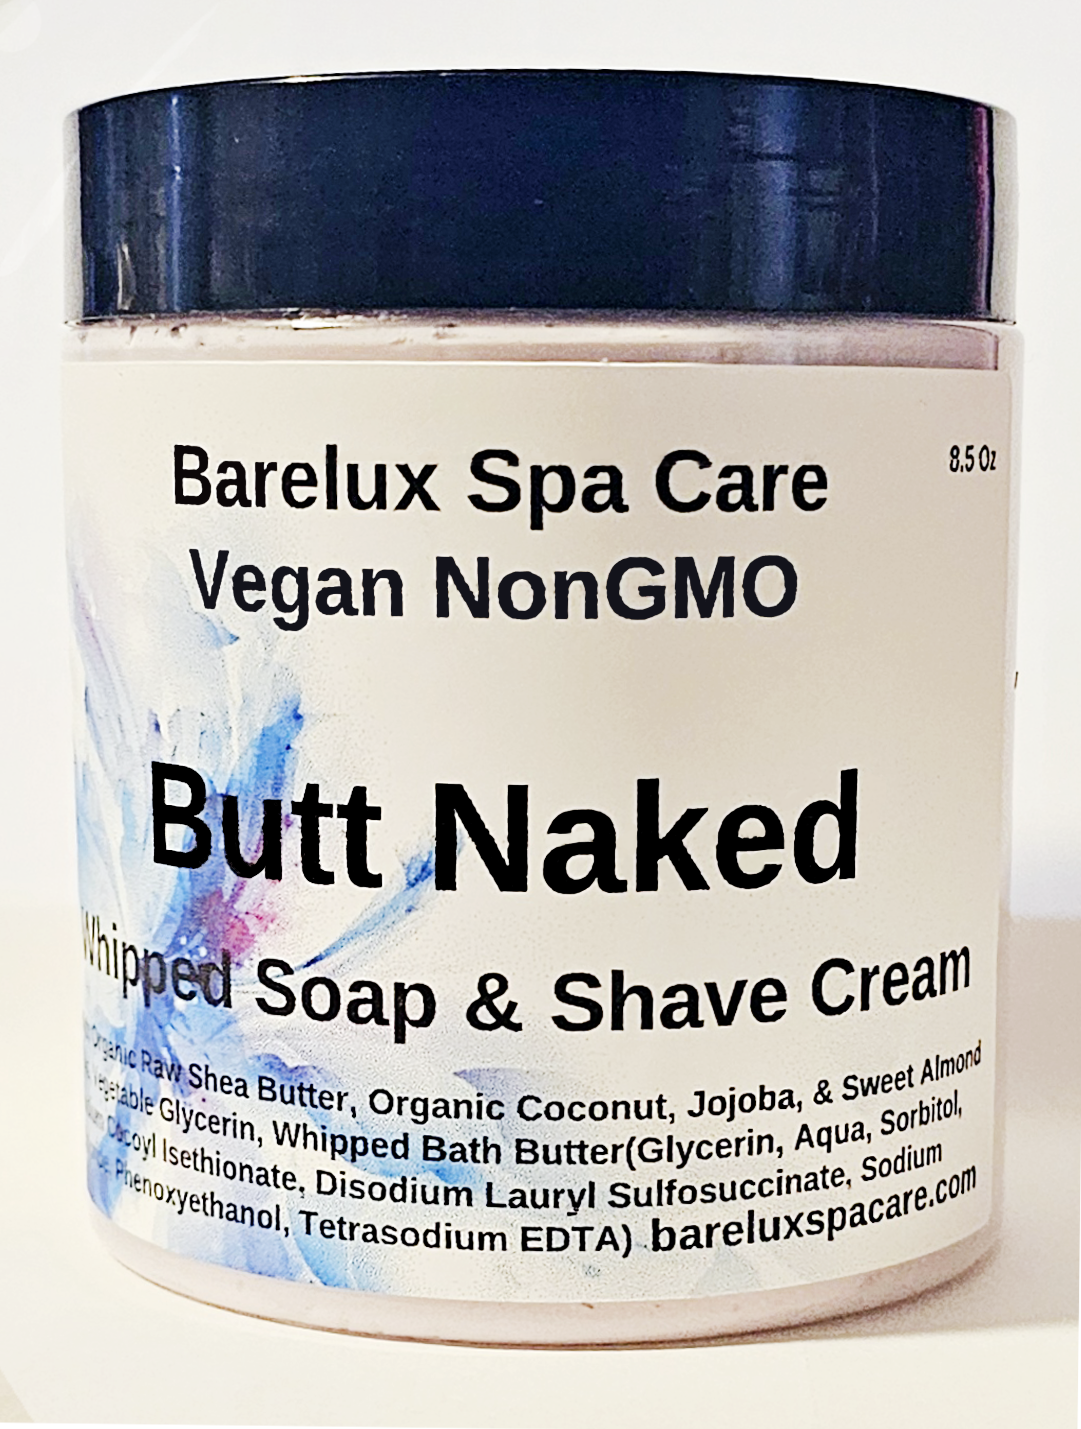 Butt Naked Whipped Soap